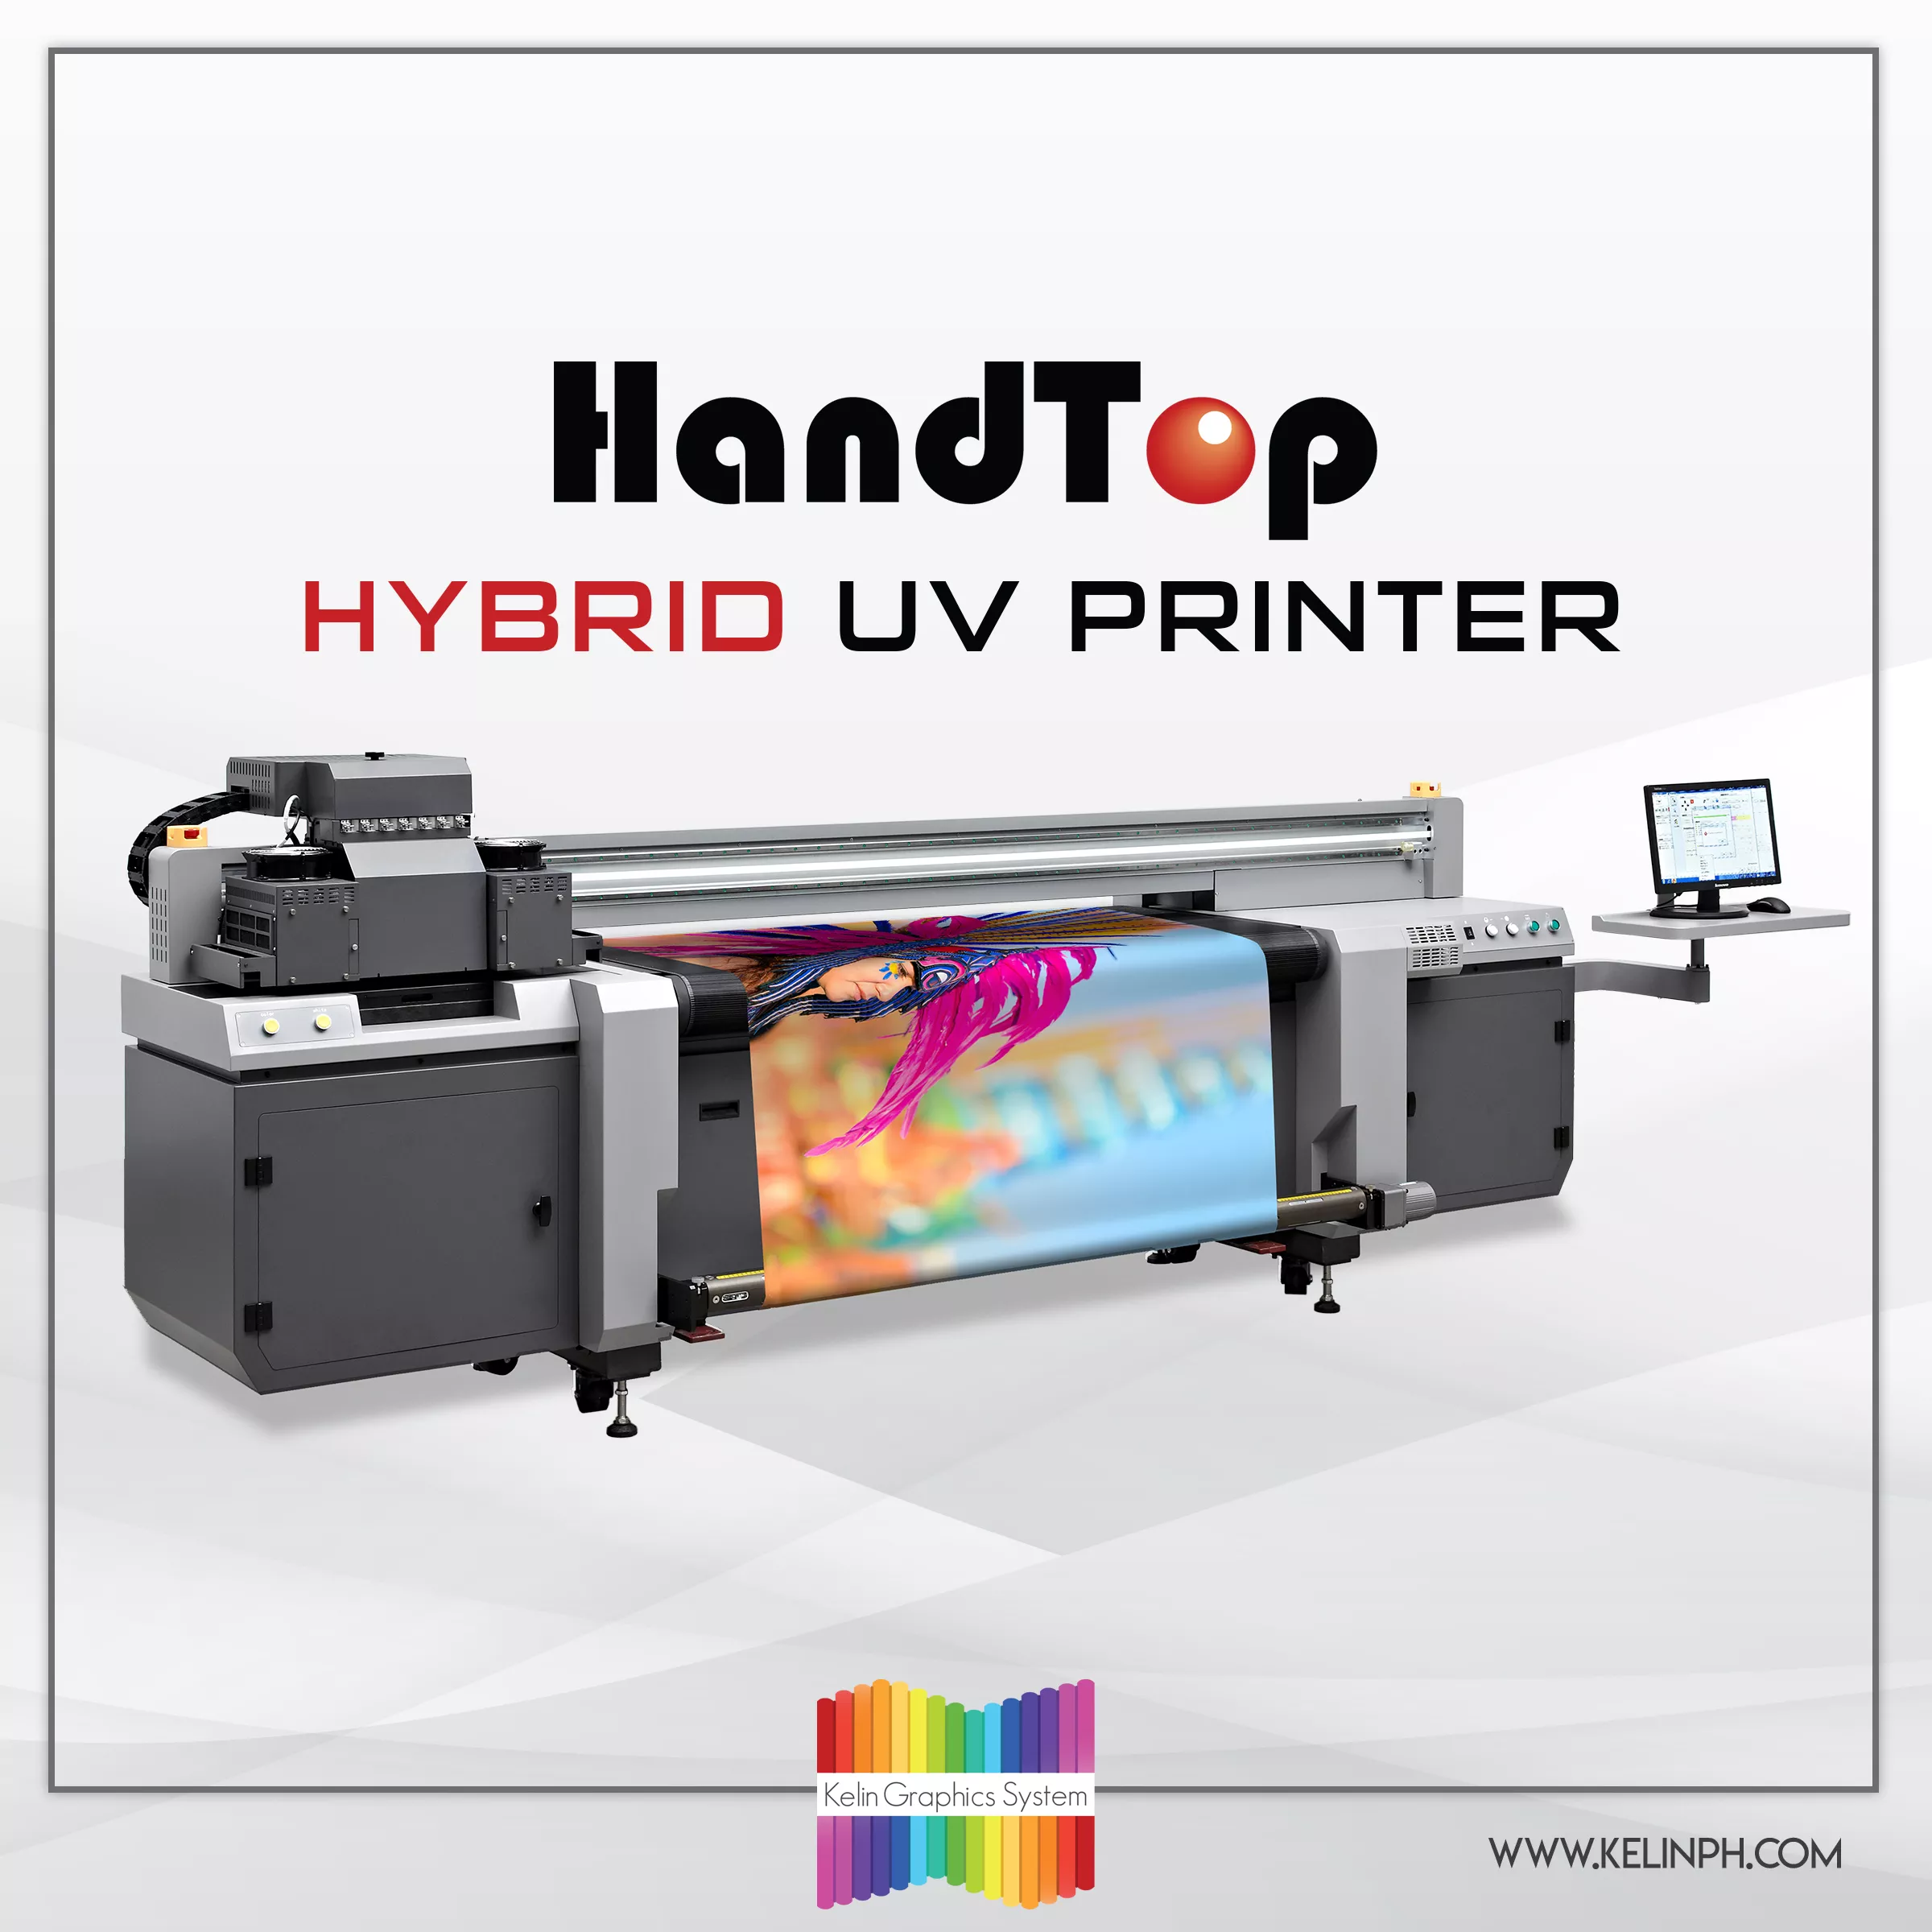 Handtop Hybrid UV Printer